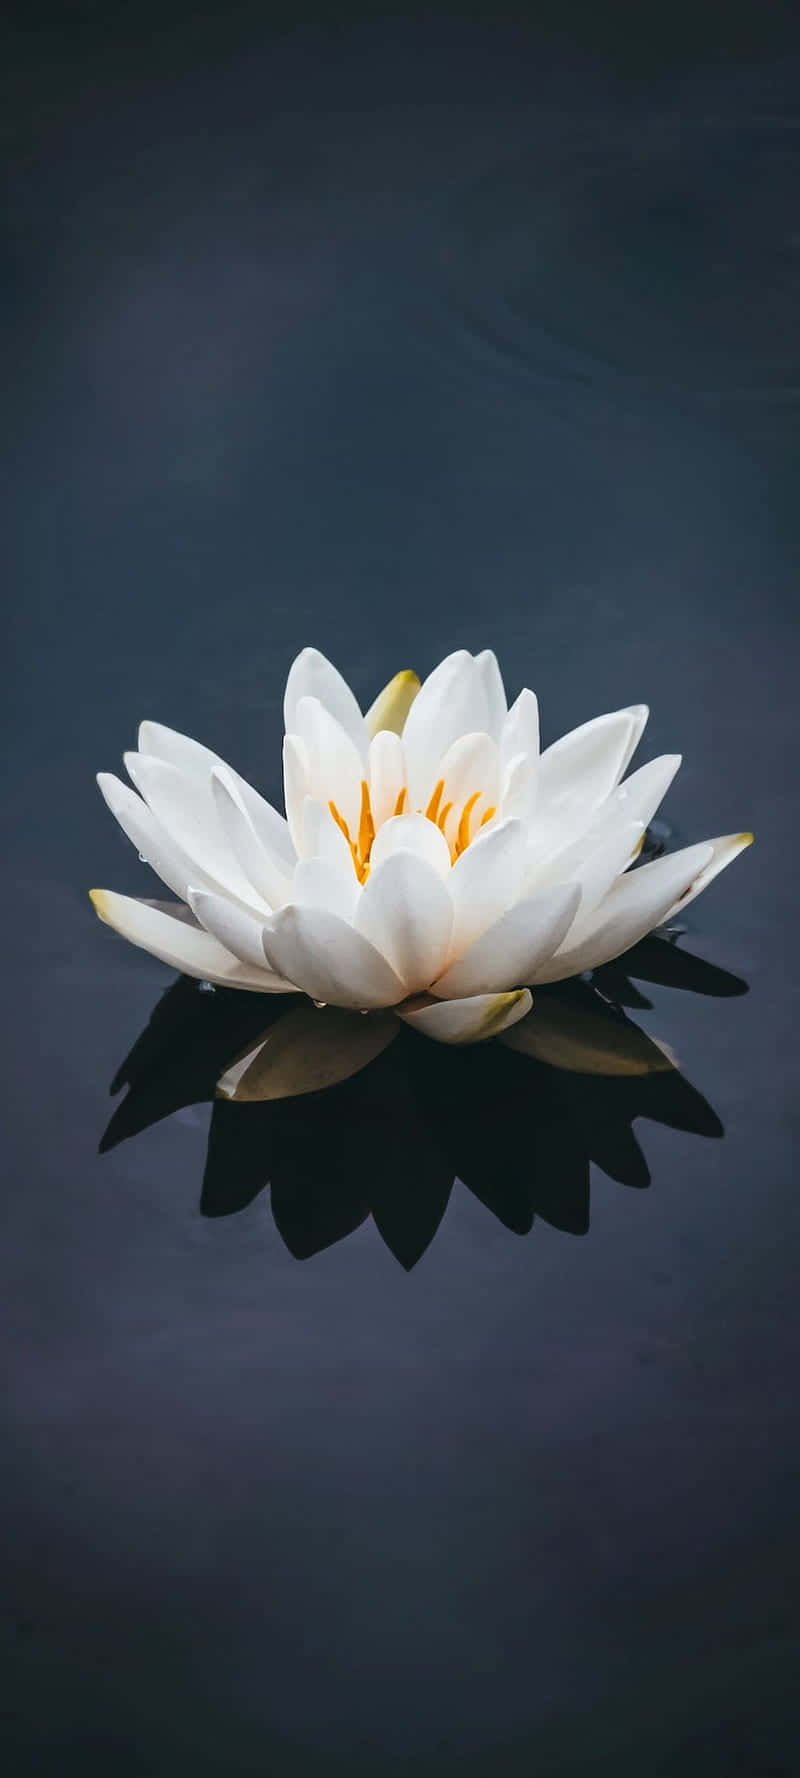 Serene White Lotus Reflection Wallpaper